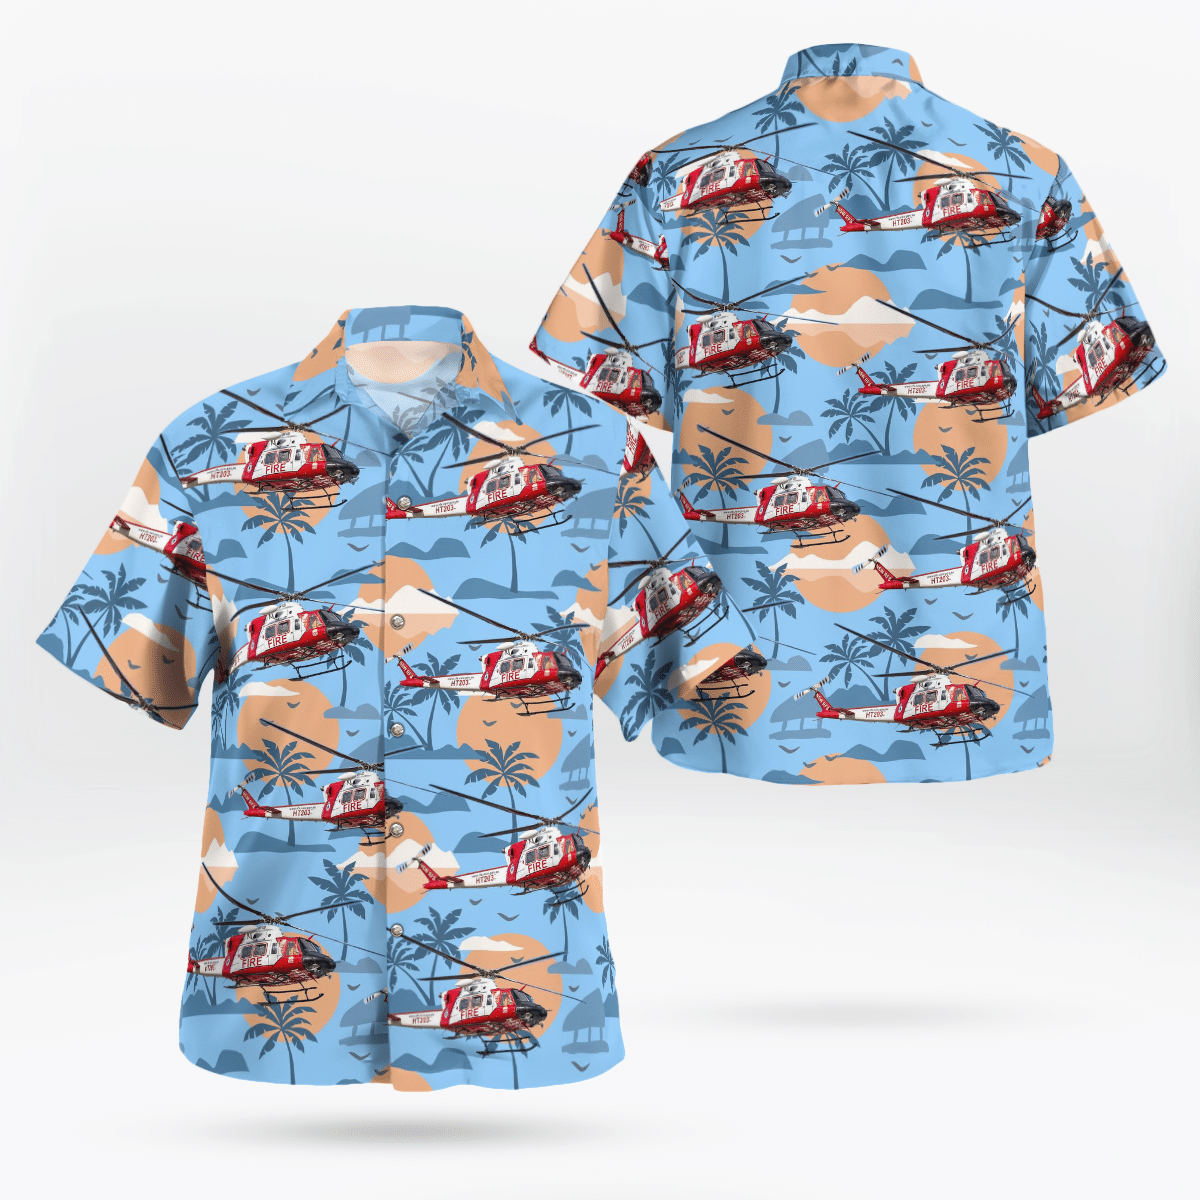 Listed below are some High-quality Aloha Shirt 73